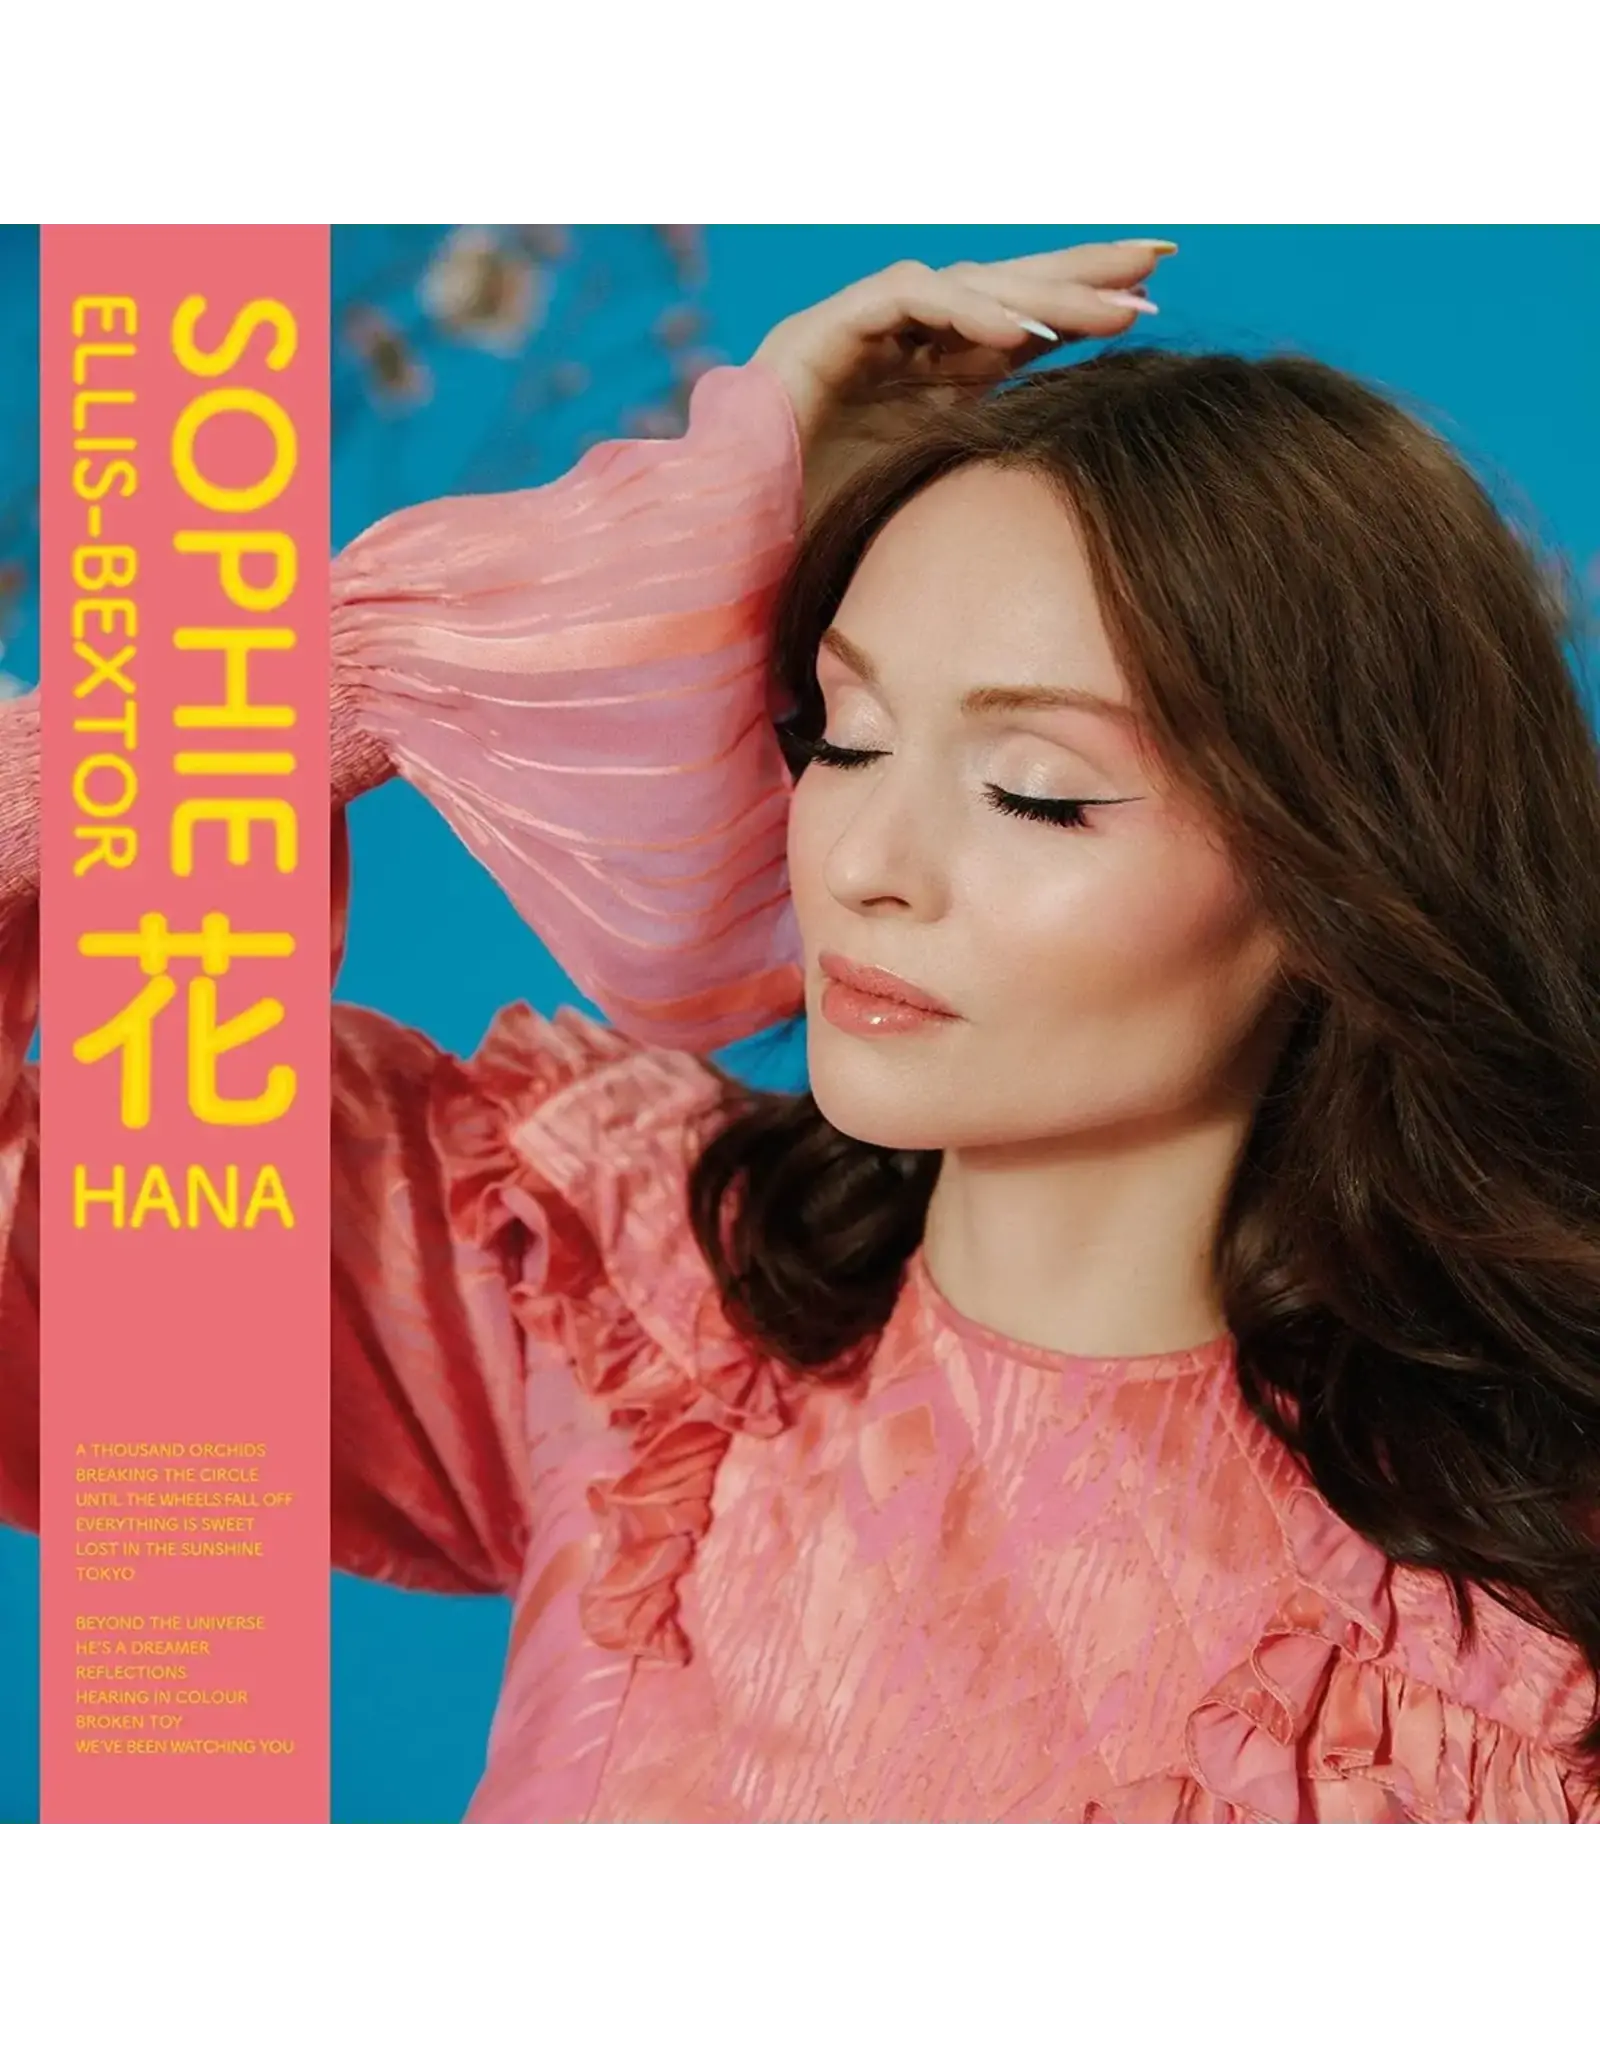 Sophie Ellis-Bextor - Hana (Exclusive Sandstone Vinyl)